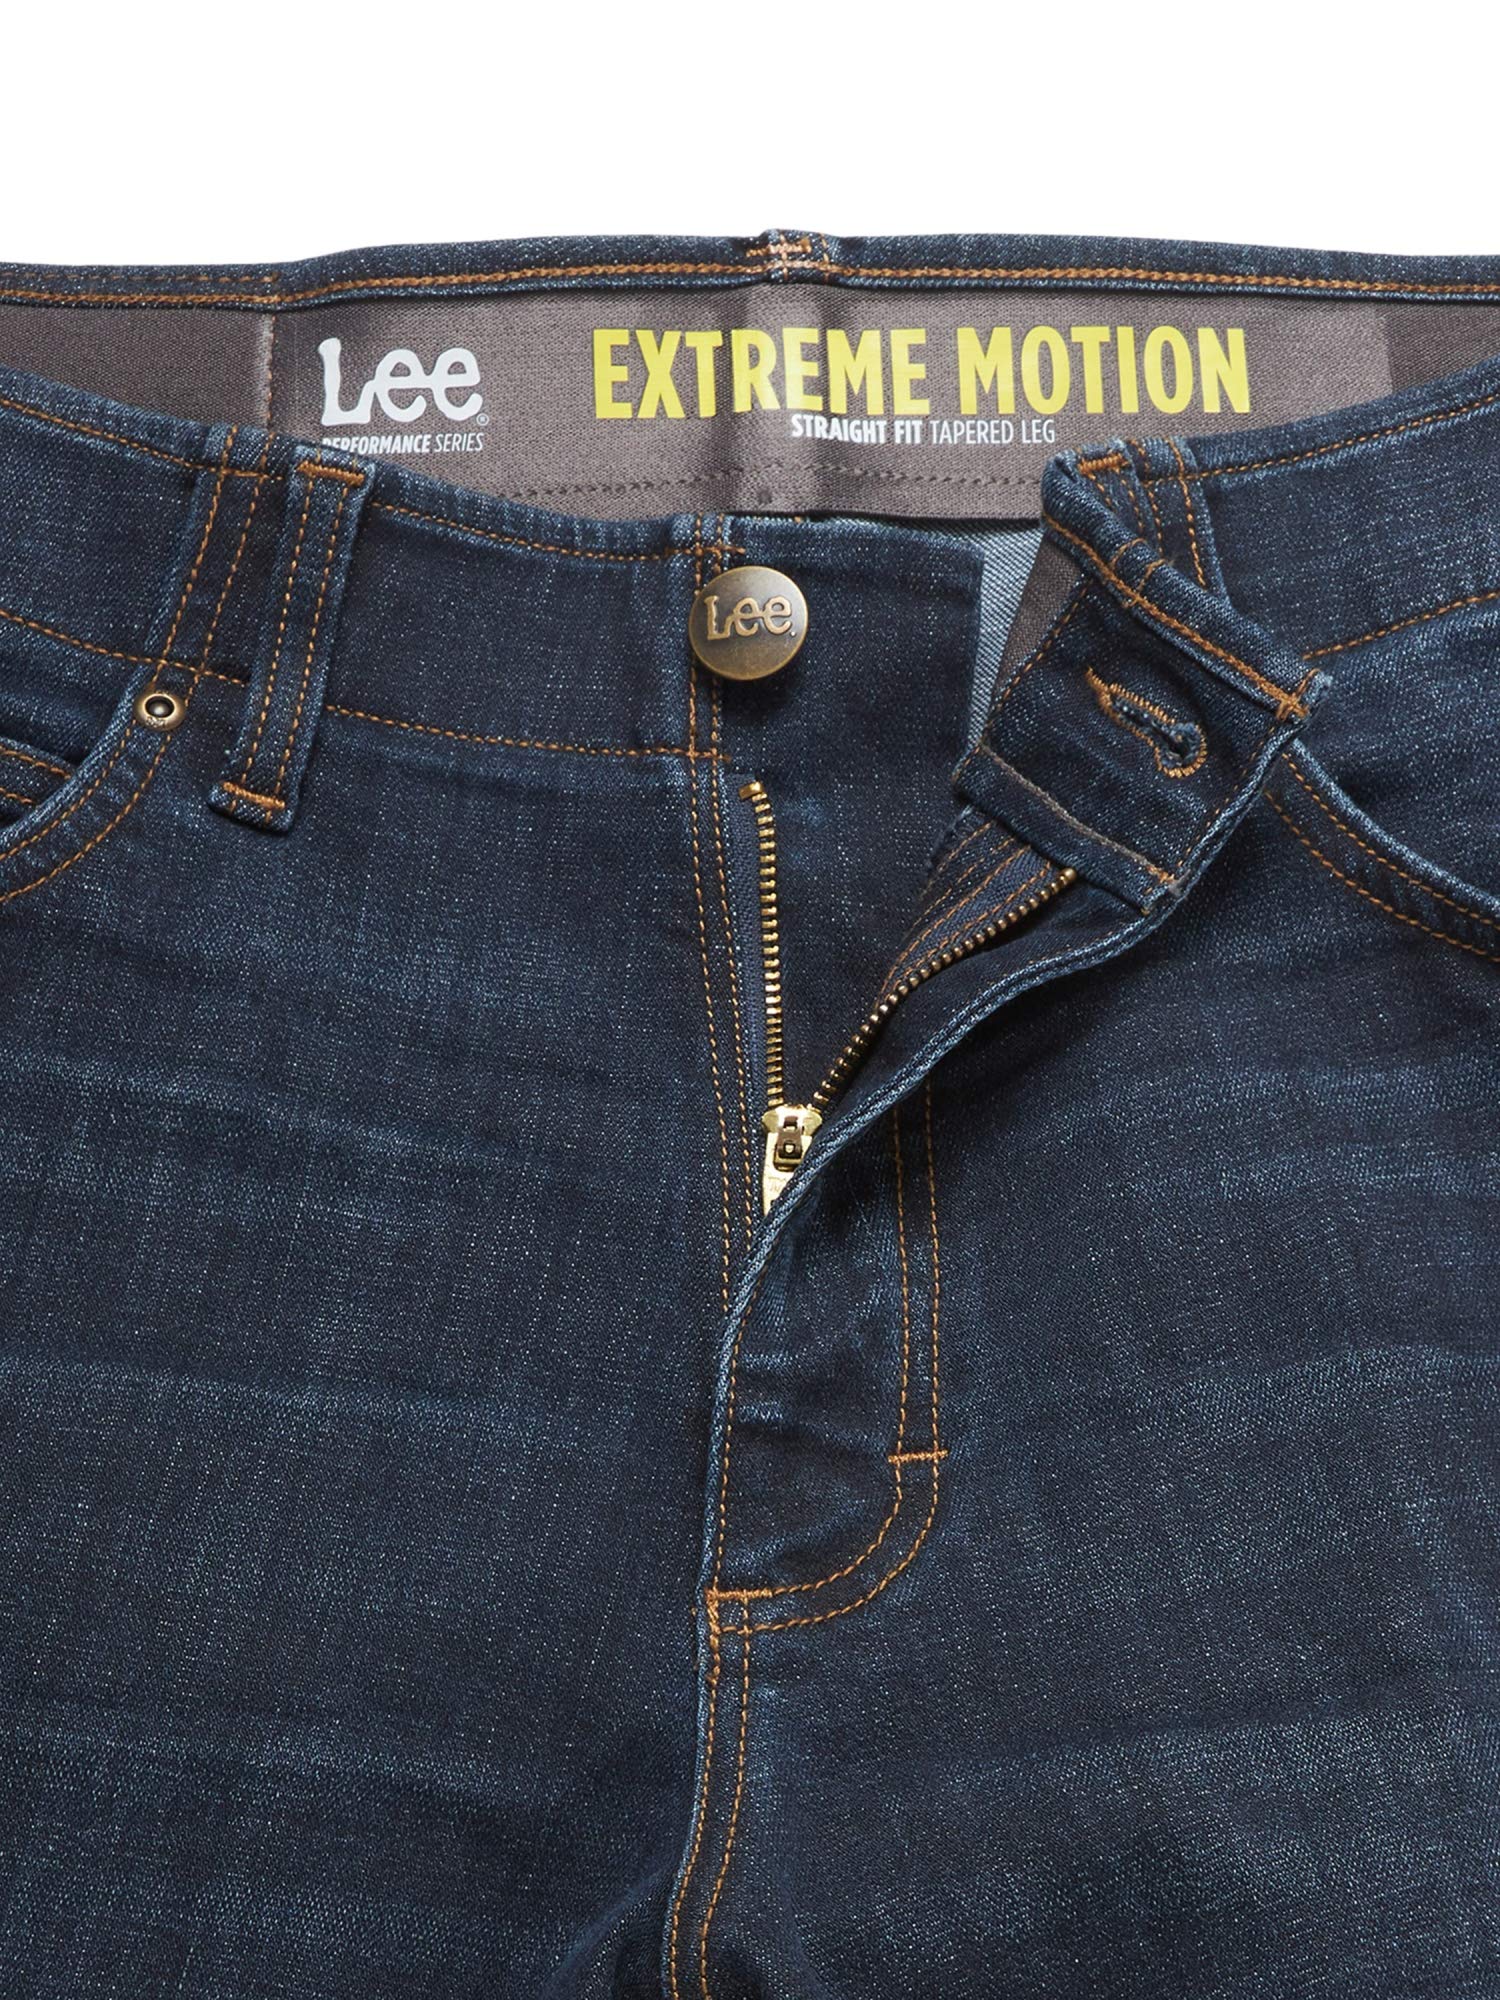 Lee Men's Big & Tall Performance Series Extreme Motion Straight Fit Tapered Leg Jeans, Maverick, 56W x 32L